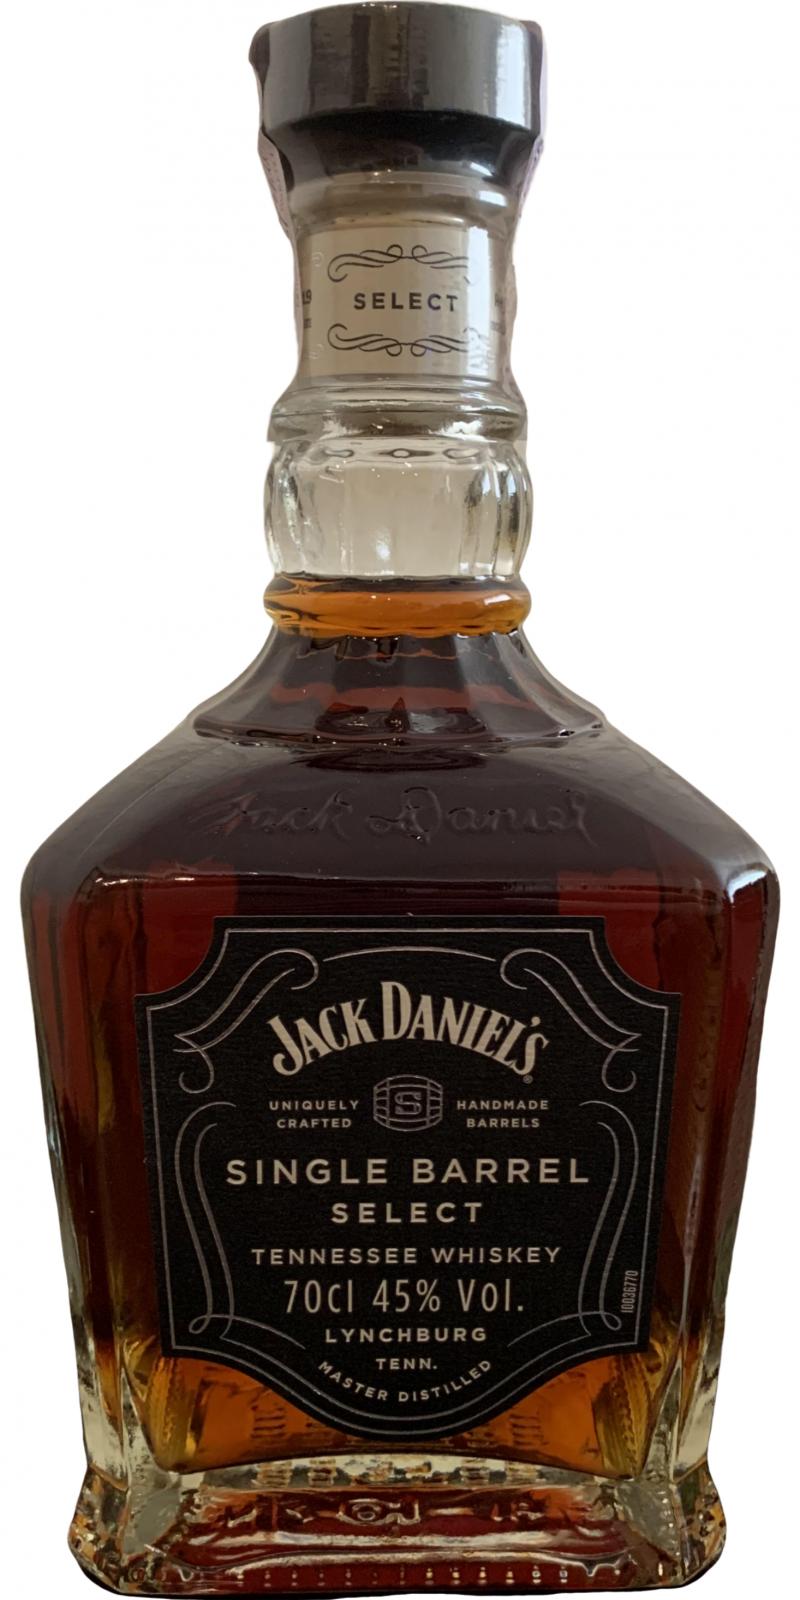 jack daniels select single barrel